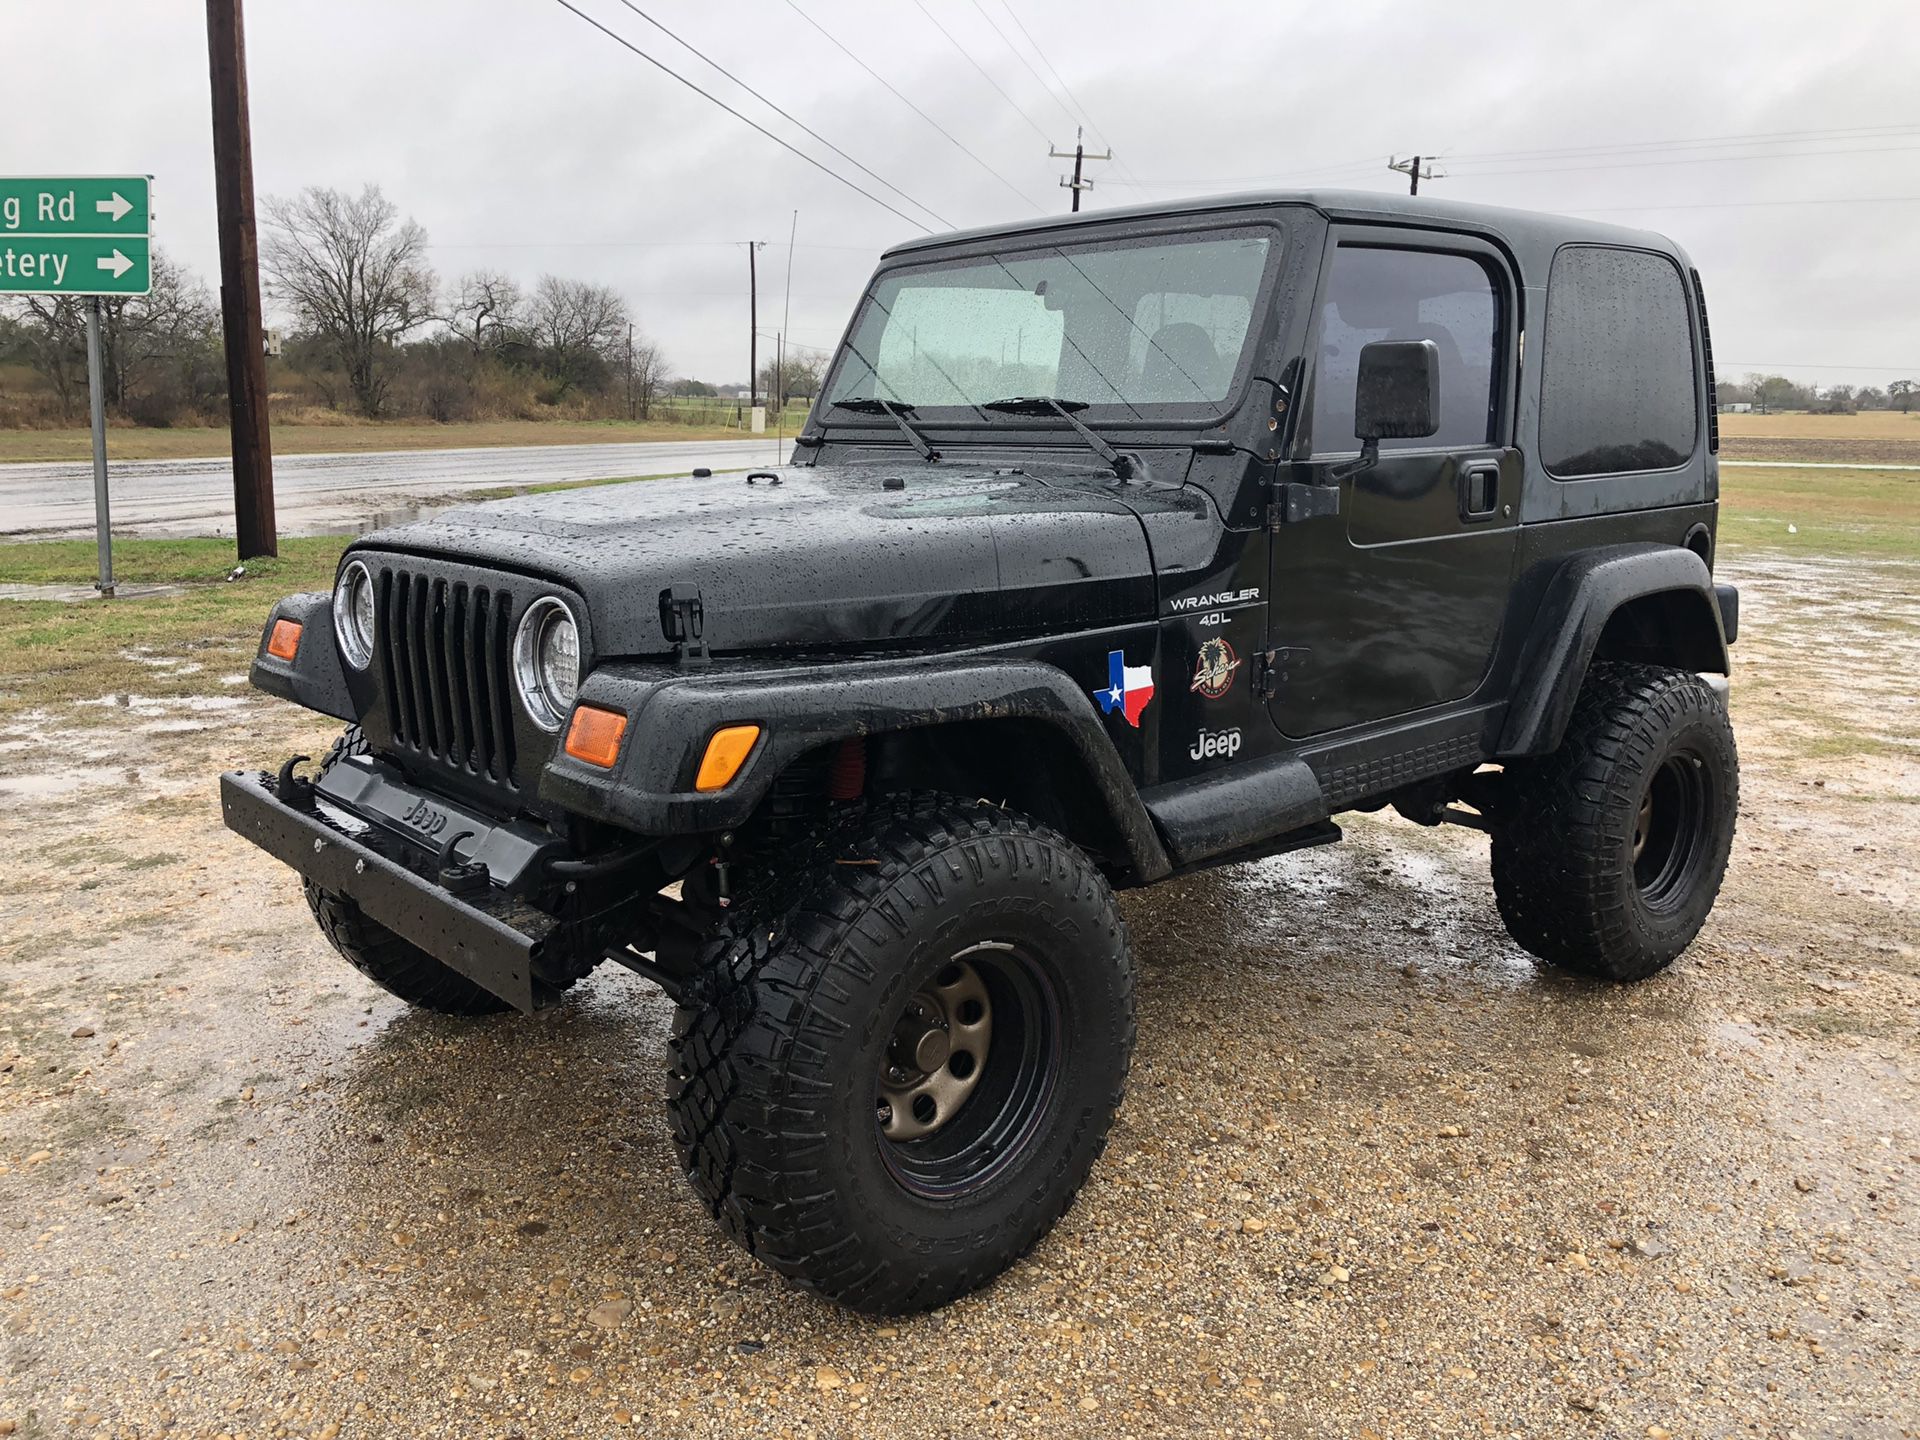 2001 Jeep Wrangler Sahara 4x4 Hard Top for Sale in San Antonio, TX - OfferUp